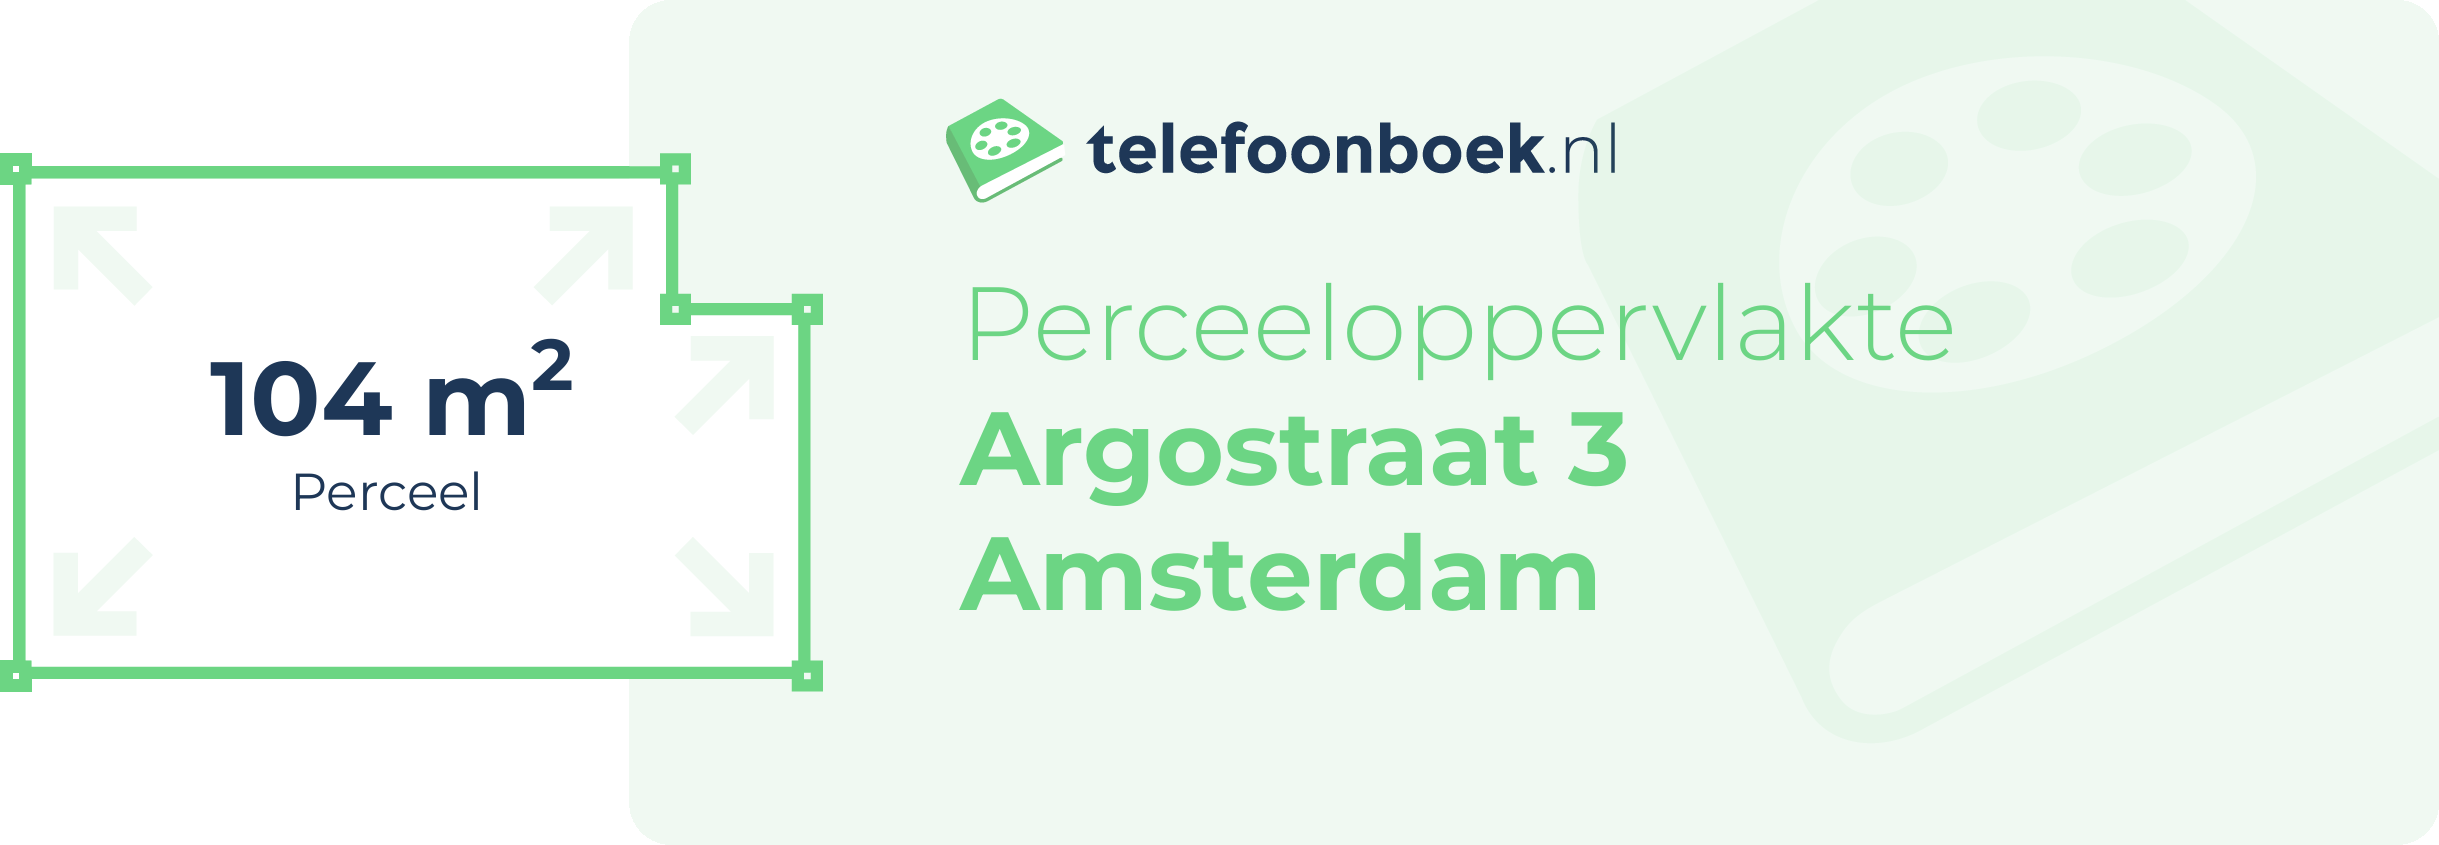 Perceeloppervlakte Argostraat 3 Amsterdam